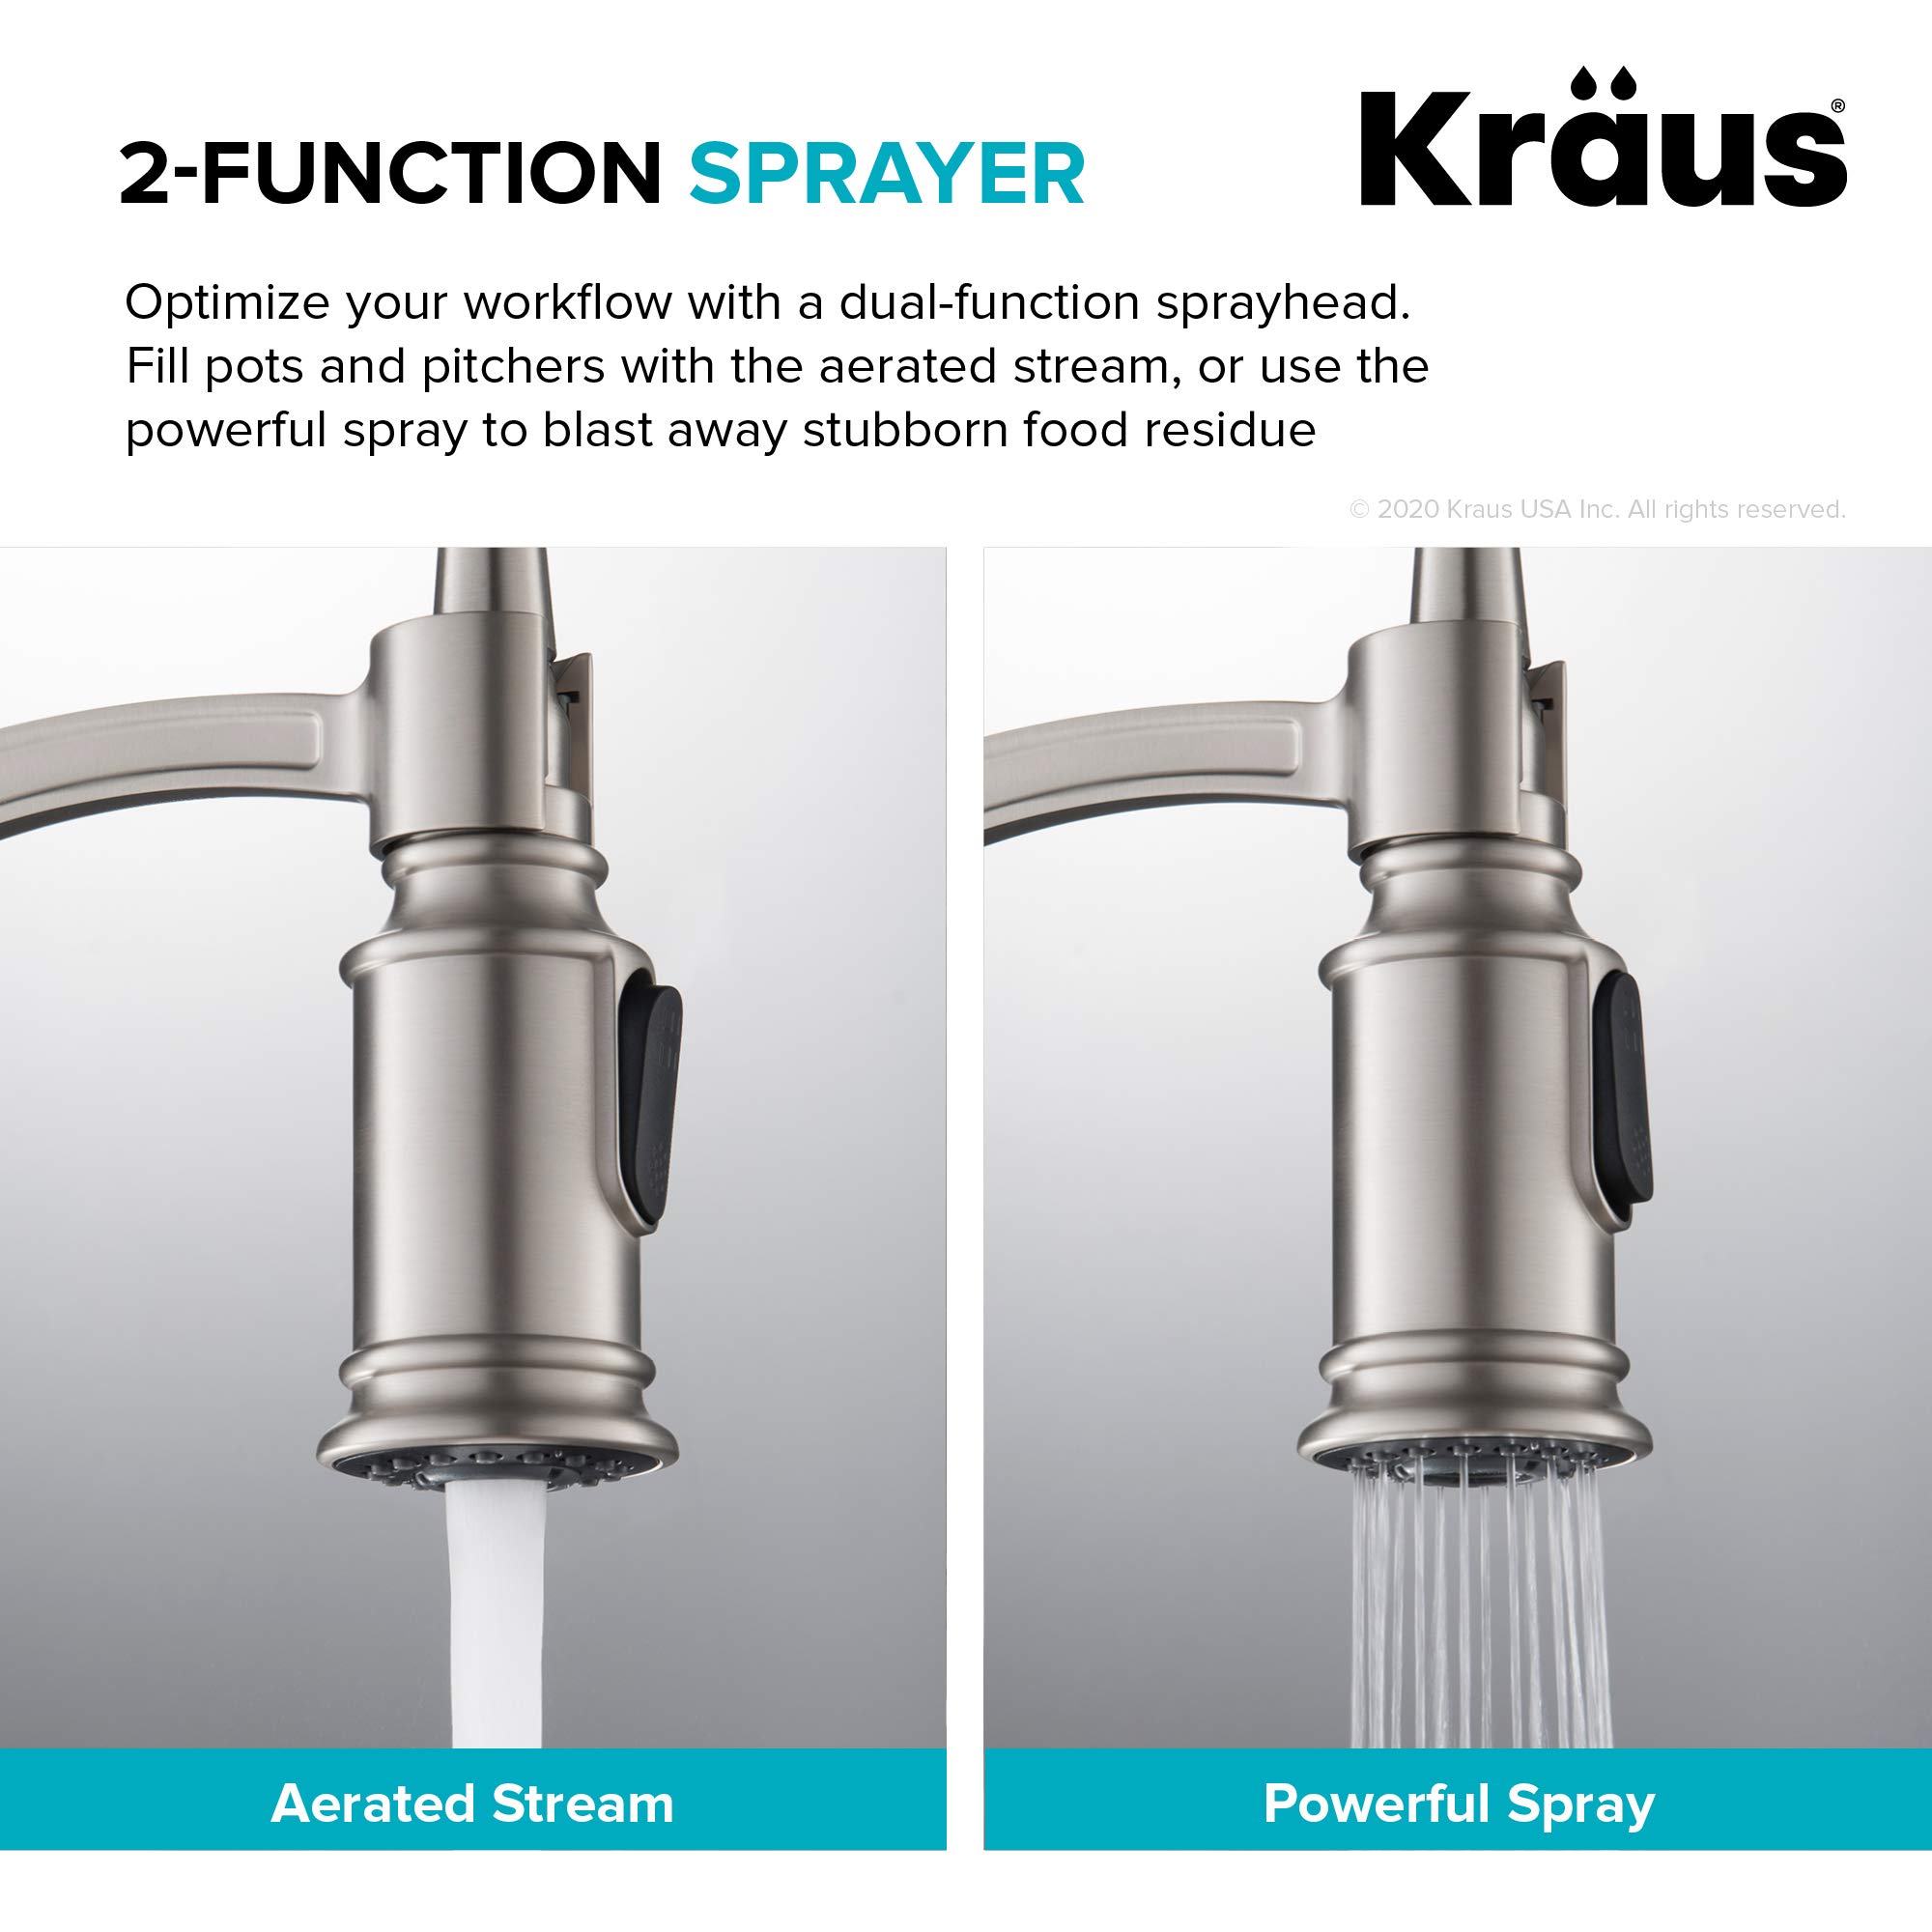 Kraus KPF-1683SFS Sellette Pull-Down Kitchen Faucet, Spot Free Stainless Steel